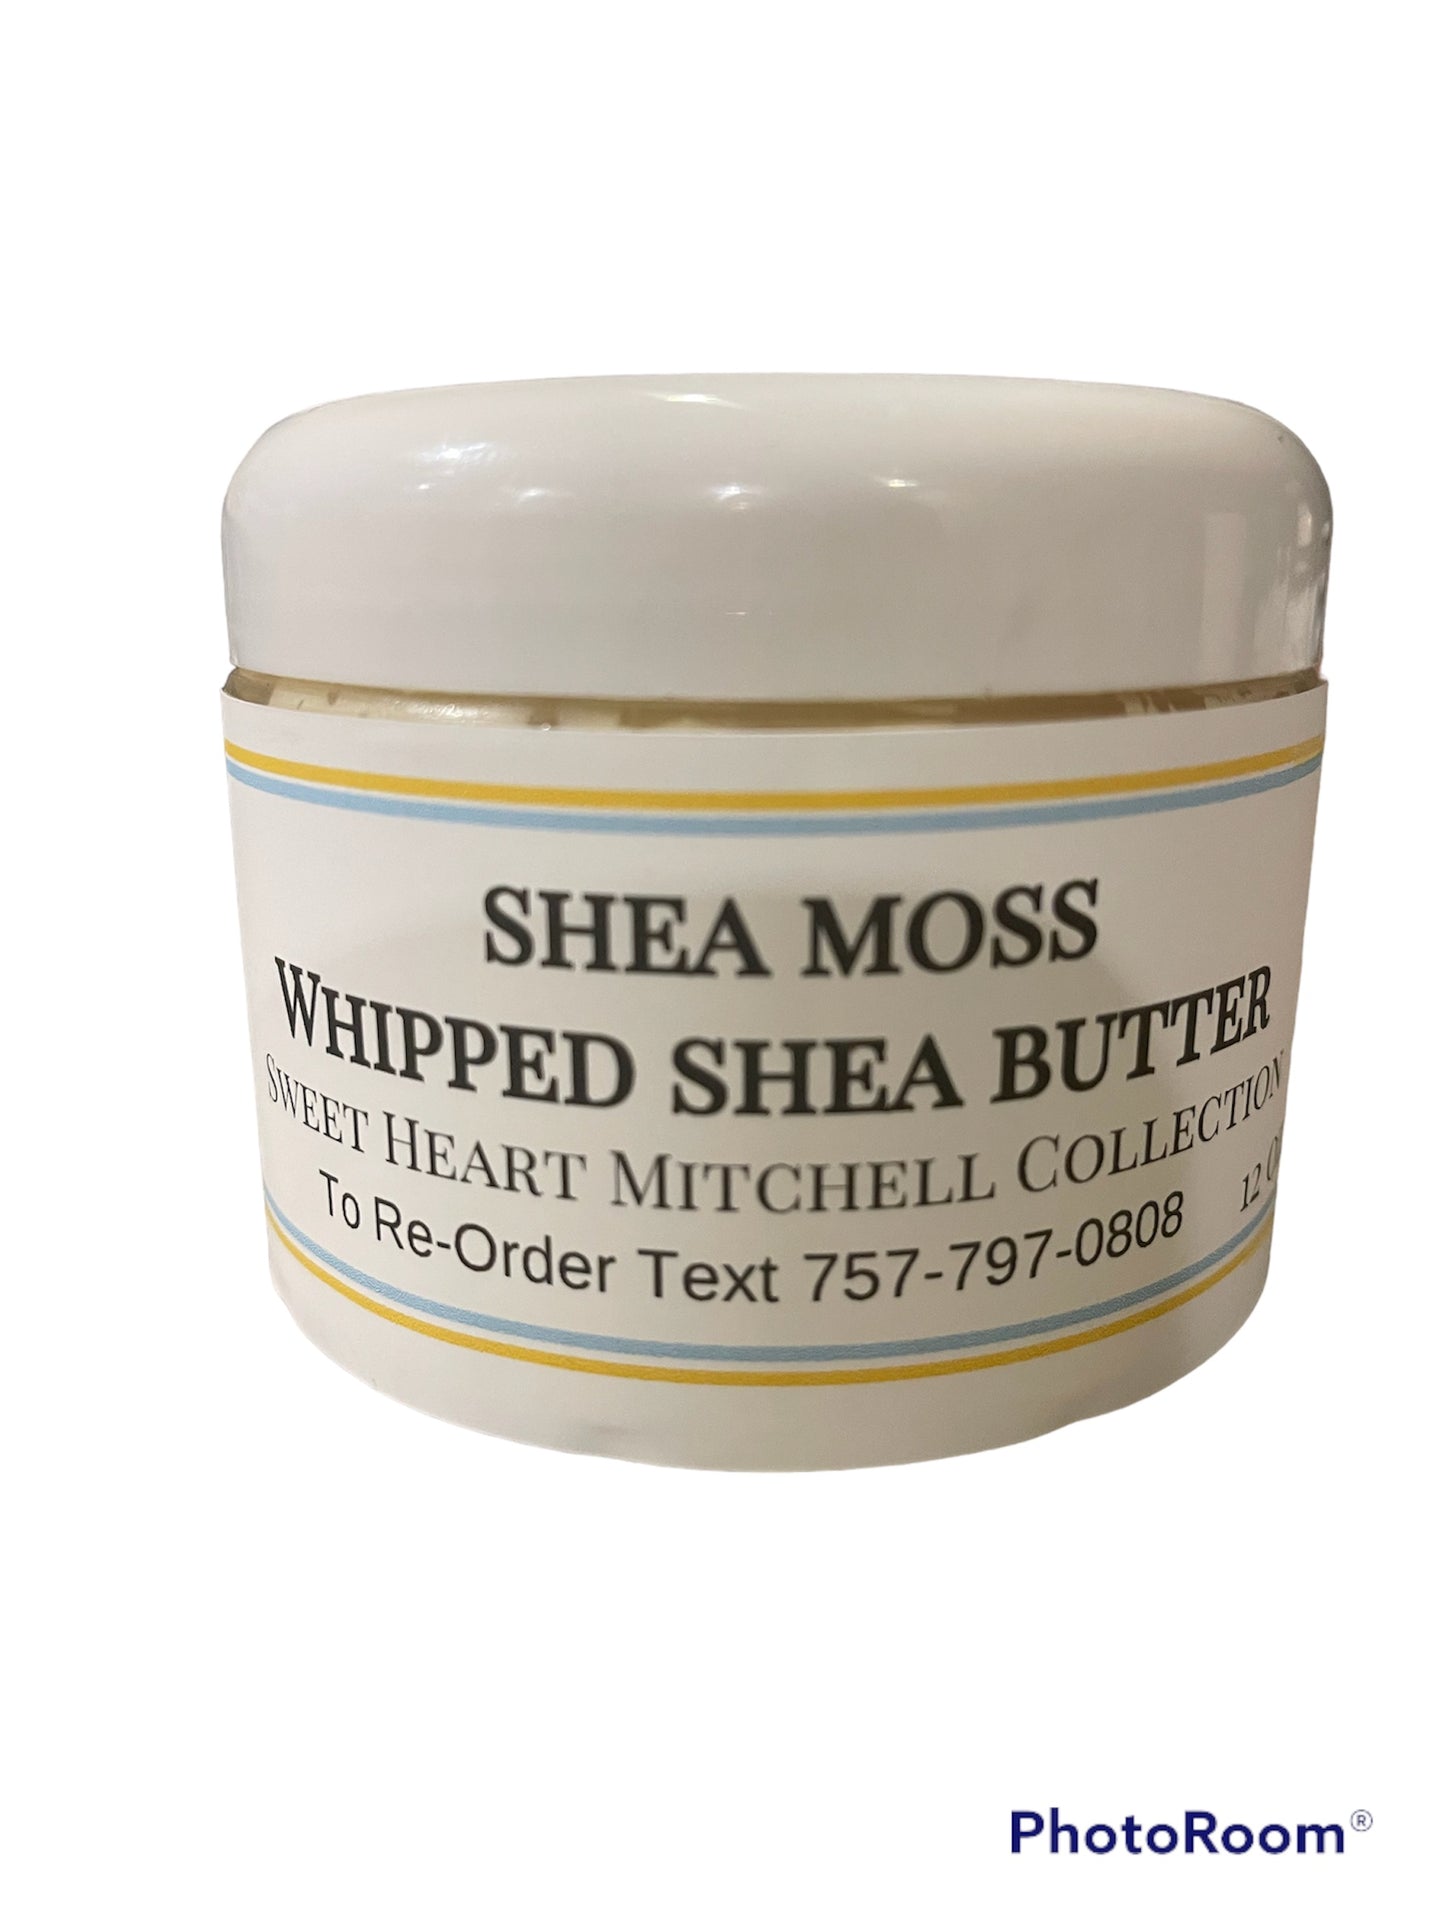 Shea Moss Whipped Shea Butter for Problem Skin